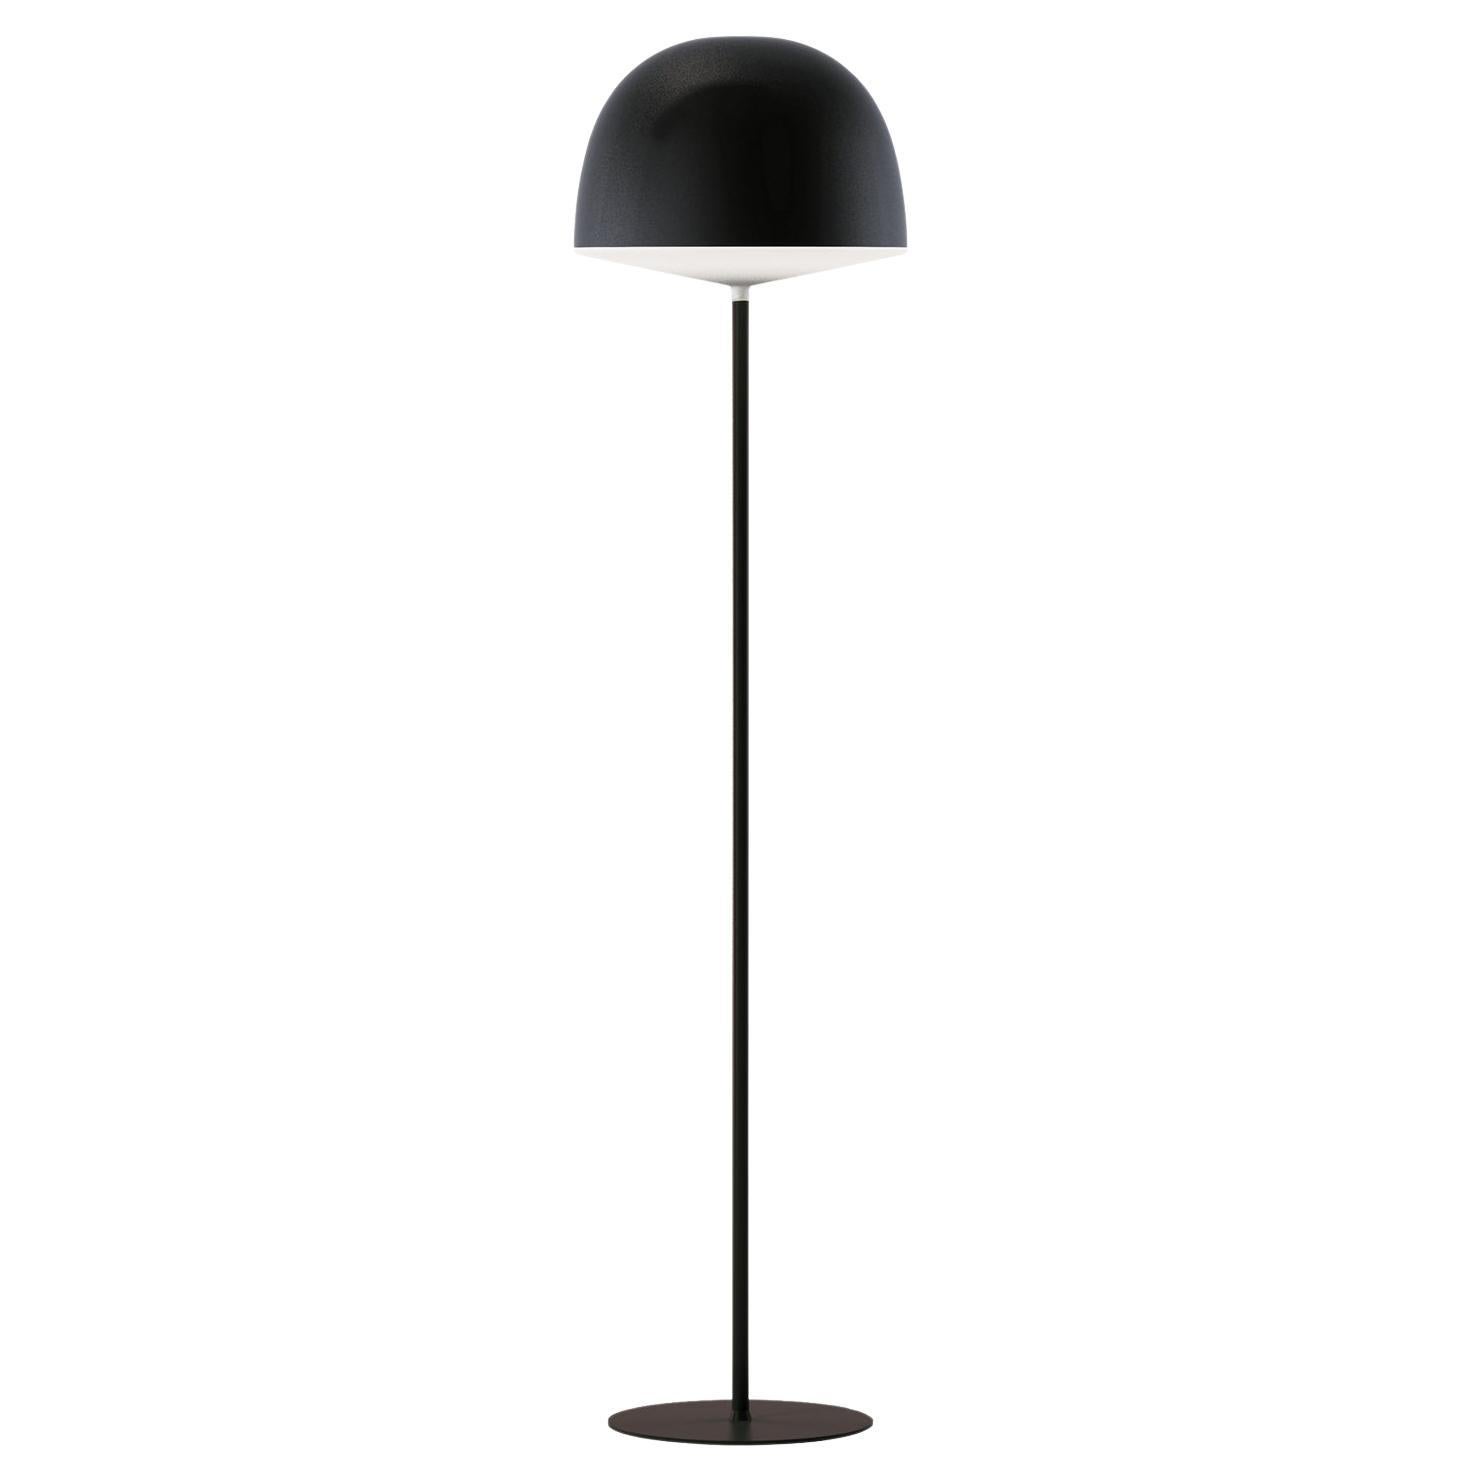 GamFratesi 'Cheshire' Floor Lamp in Black for Fontana Arte